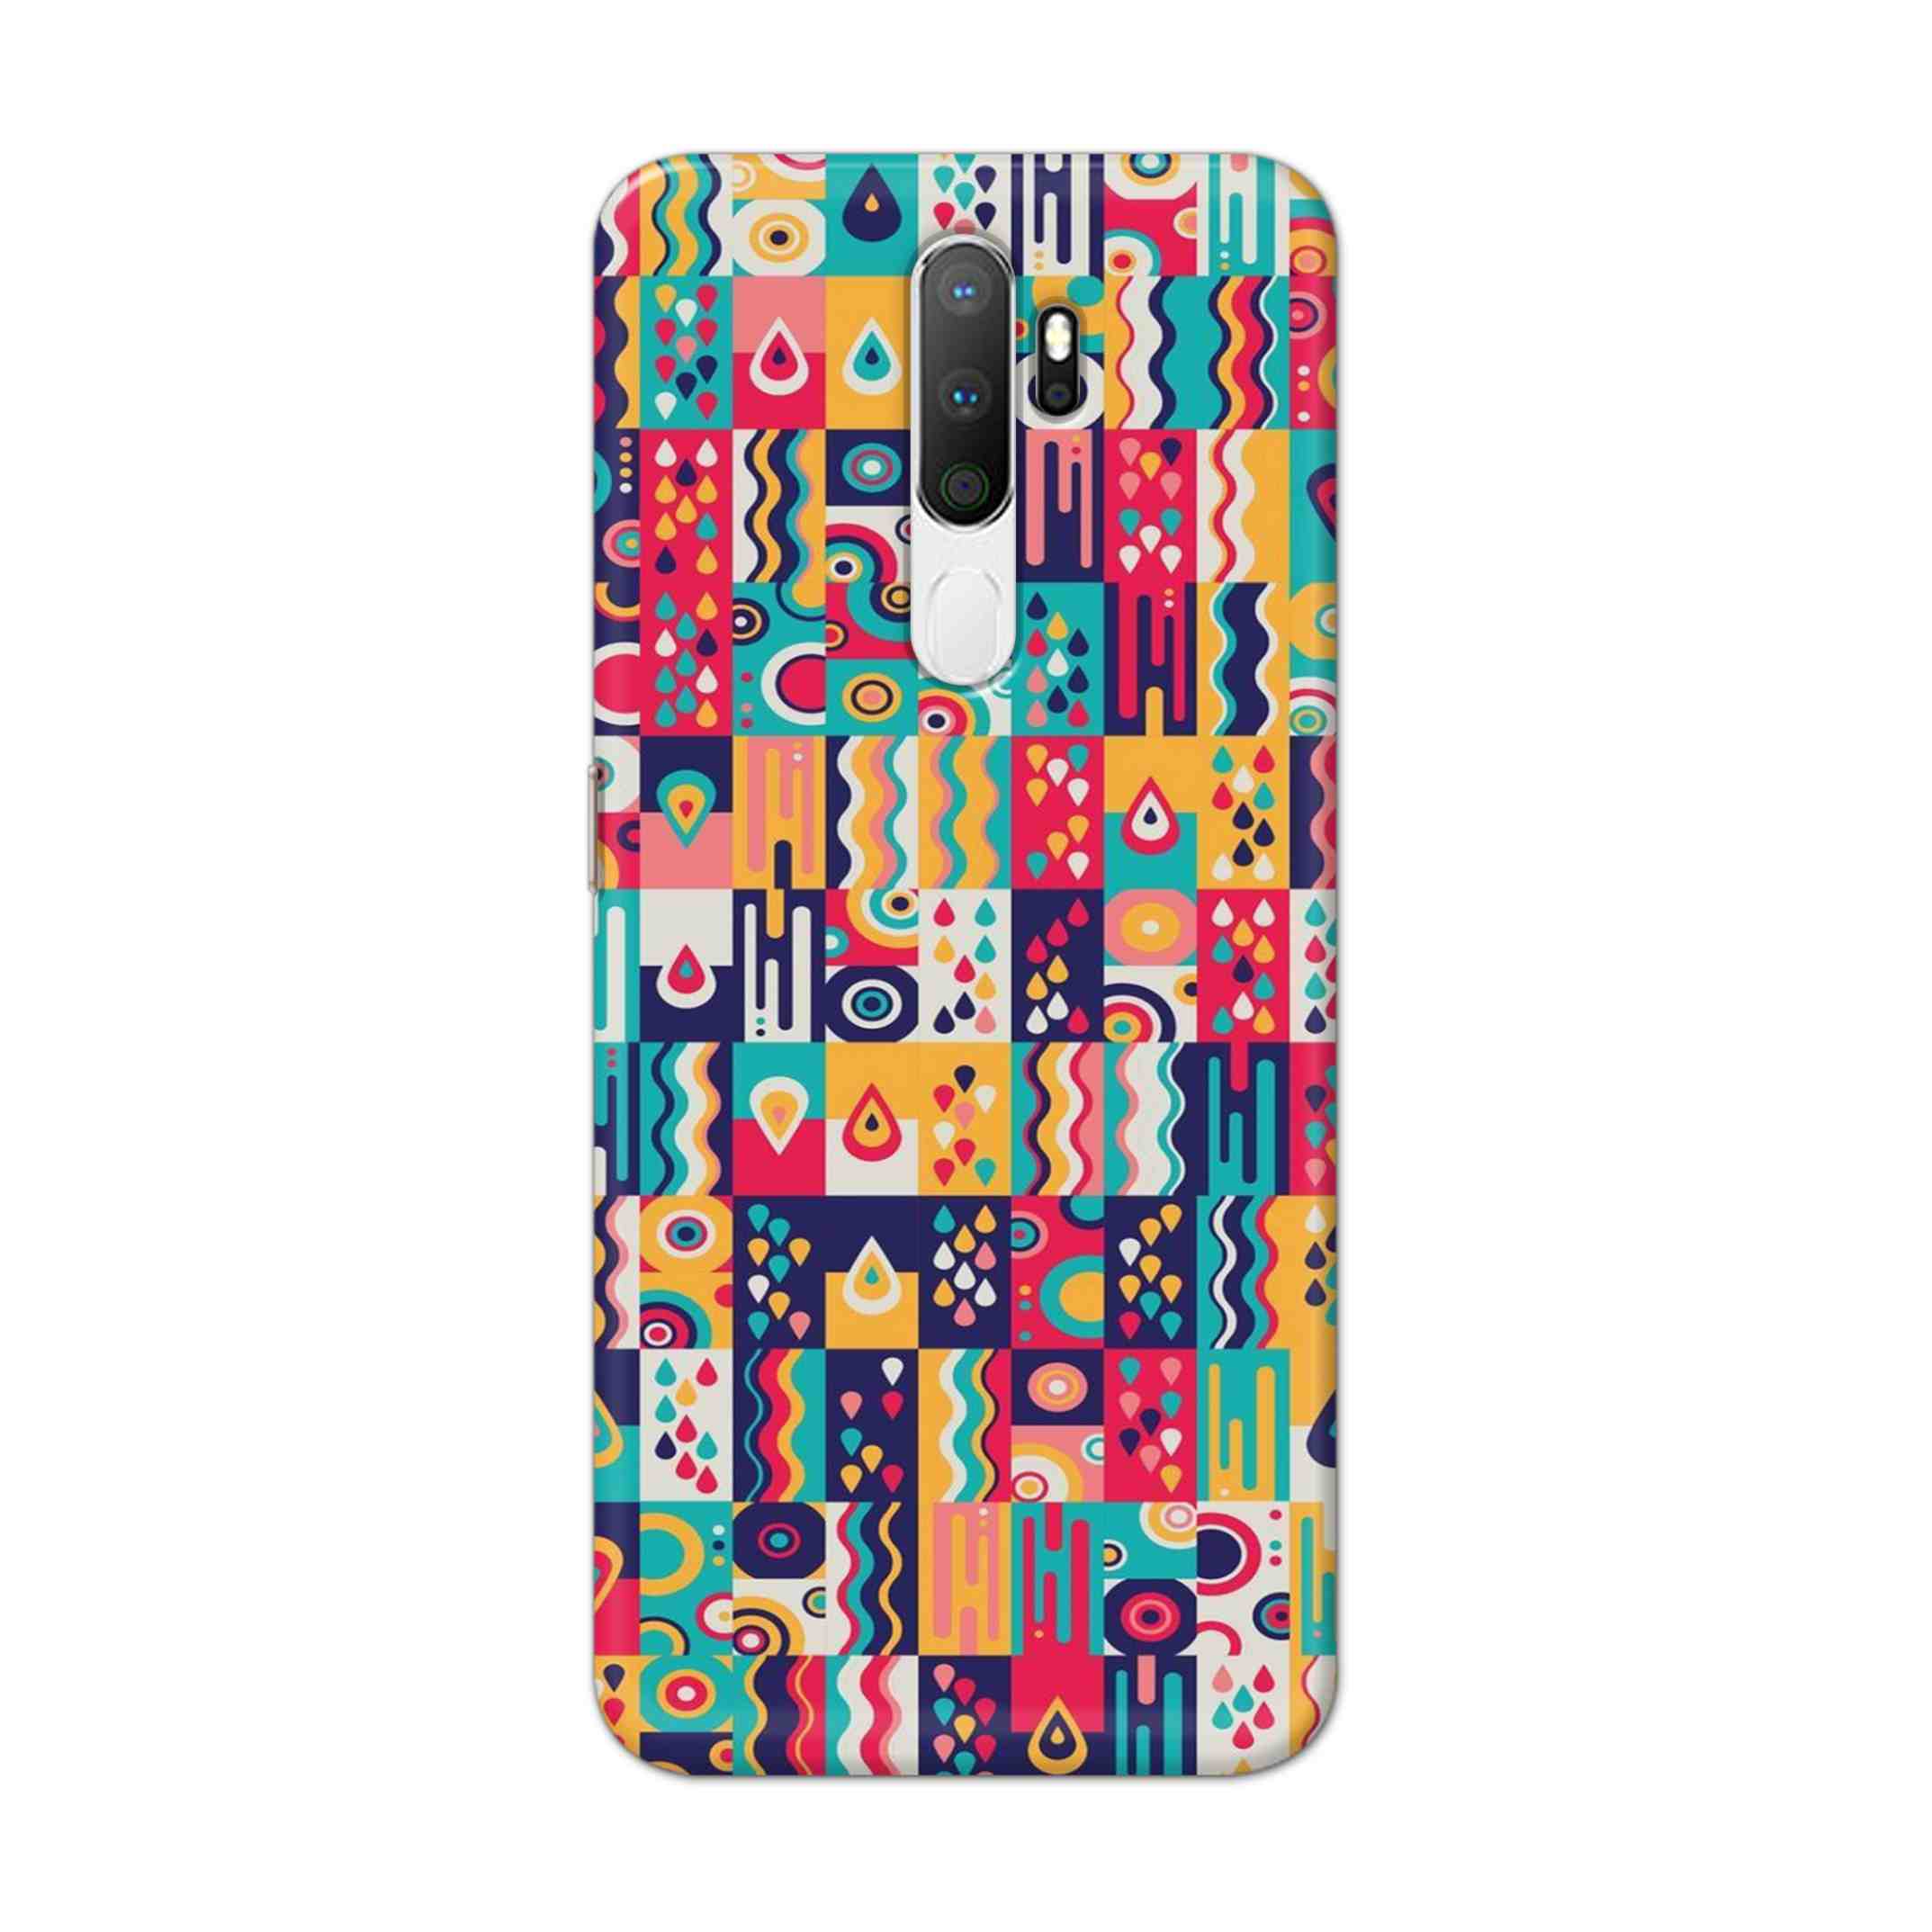 Buy Art Hard Back Mobile Phone Case Cover For Oppo A5 (2020) Online